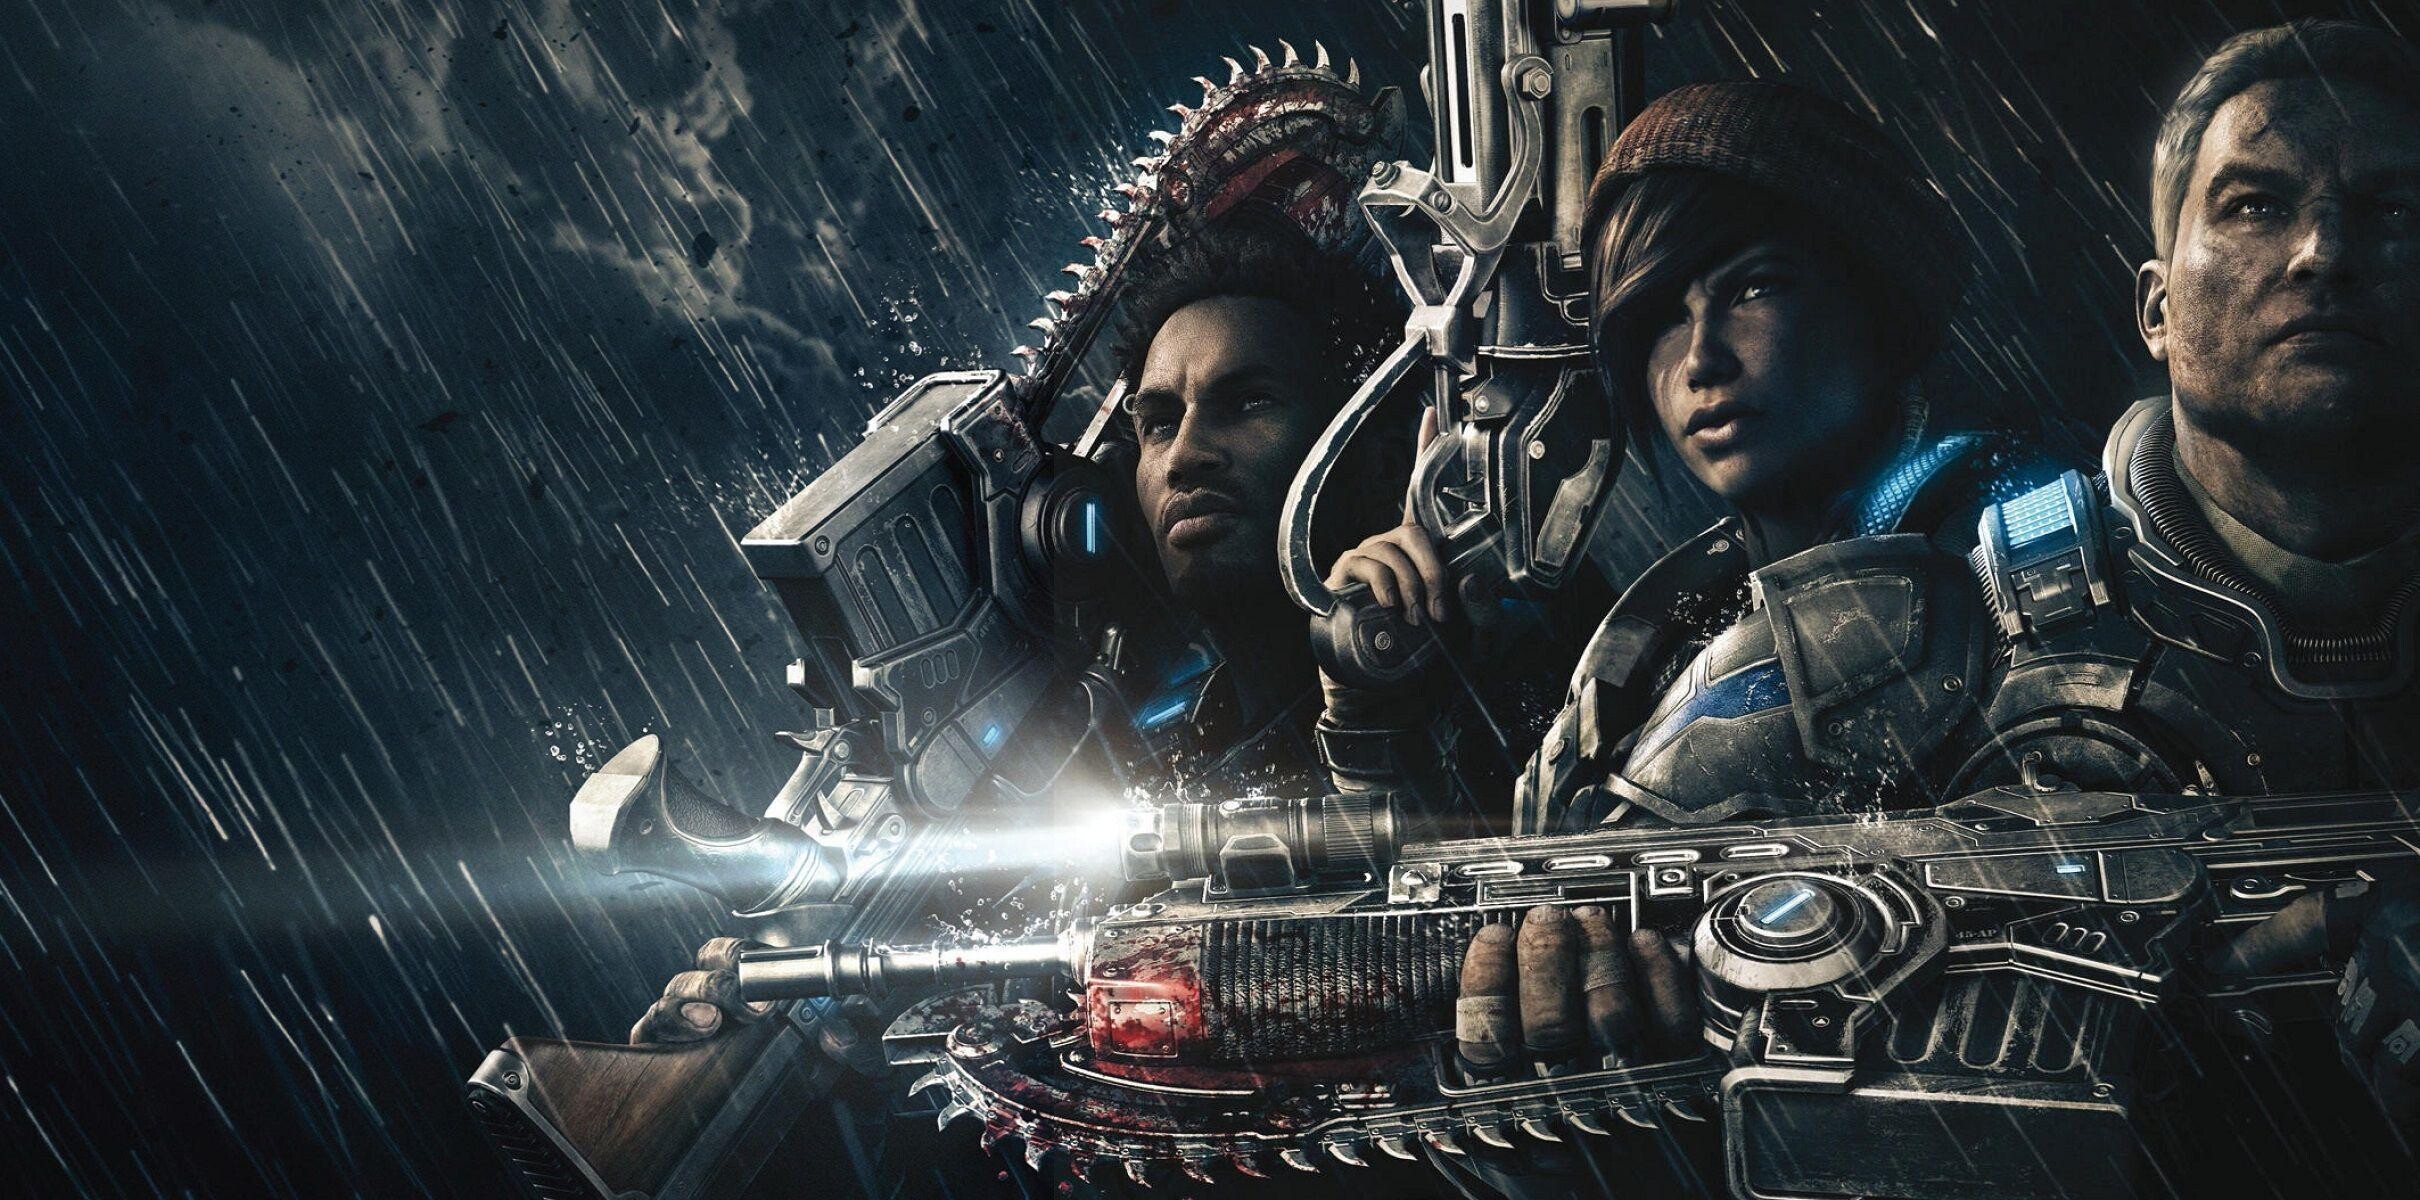 Gears of War: Captain James Dominic Fenix, Mk 2 Lancer Assault Rifle, Corporal Kait Diaz. 2420x1200 Dual Screen Background.